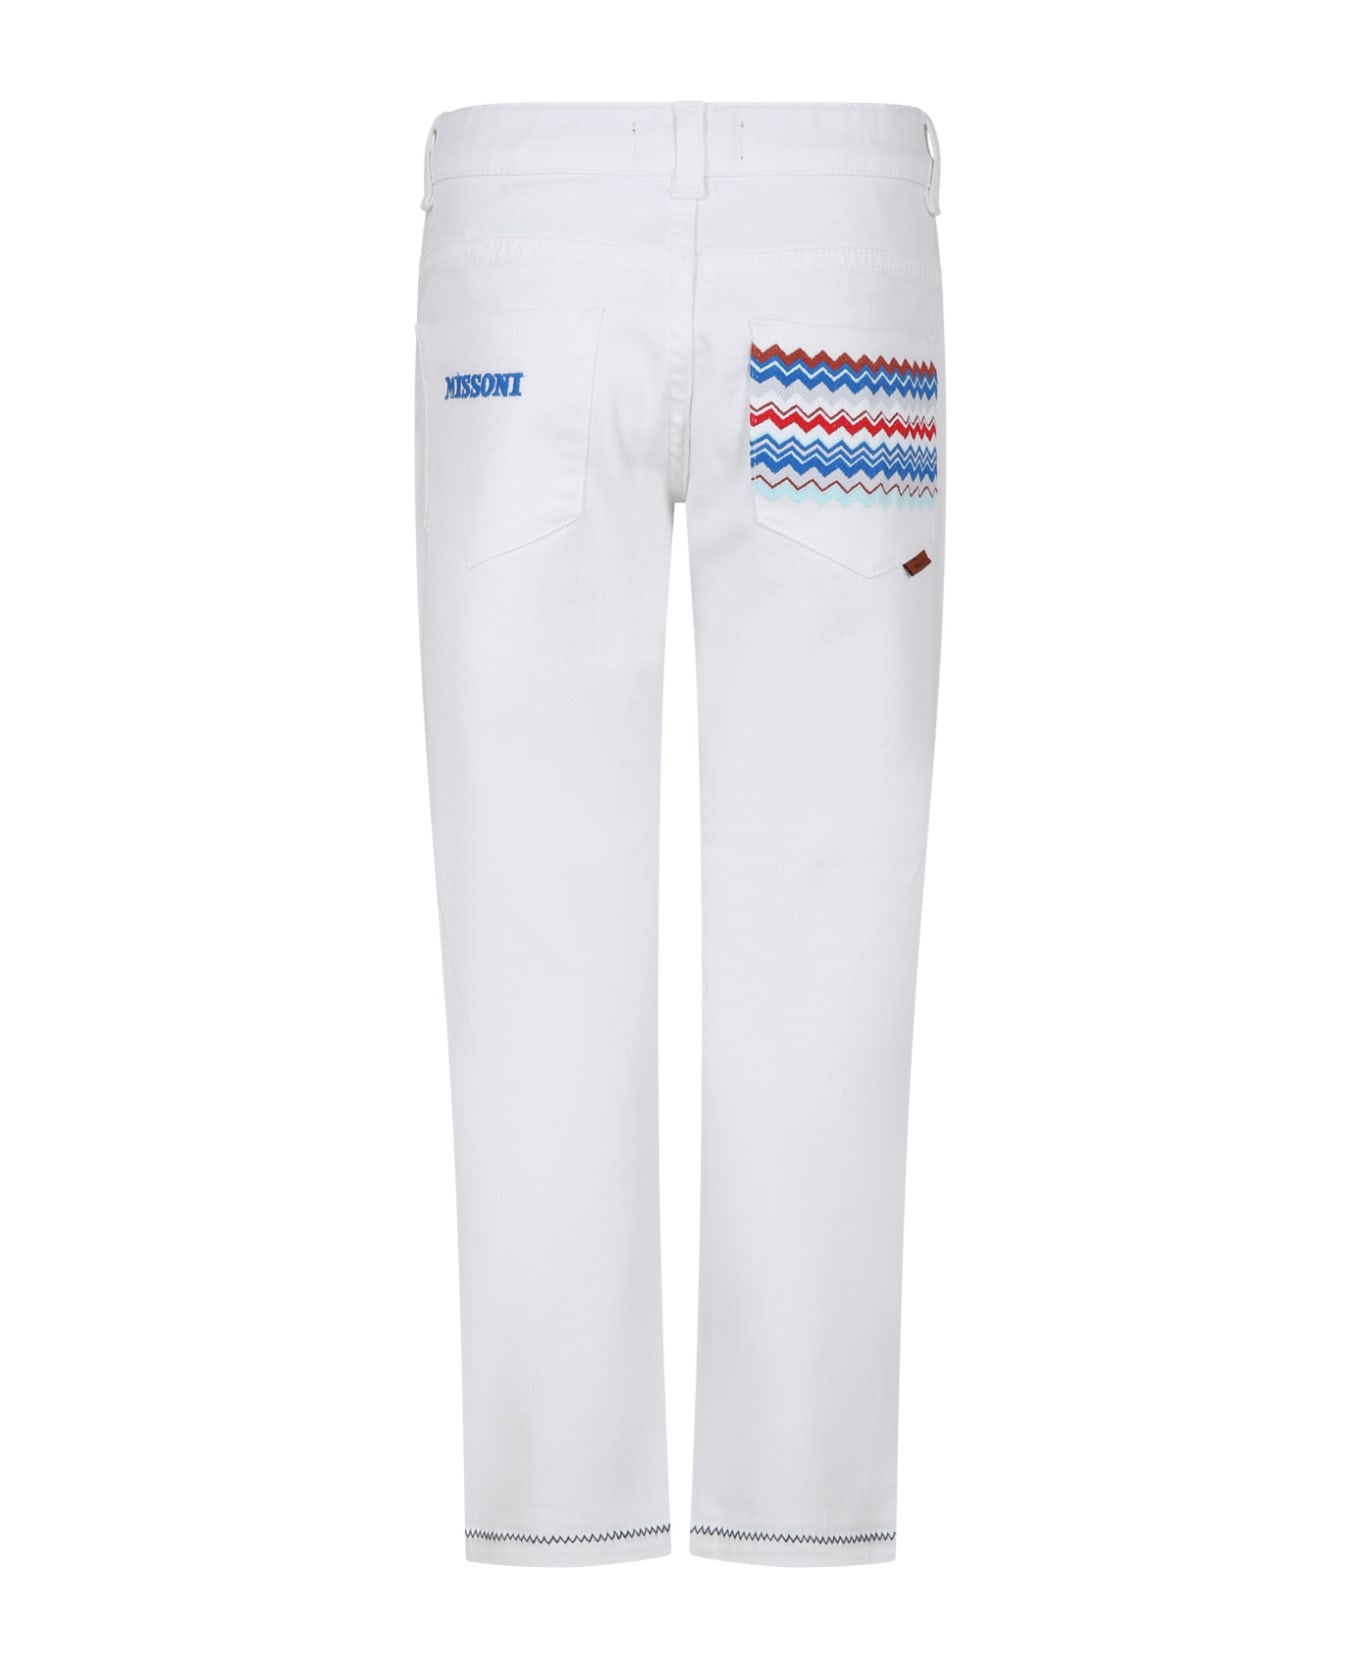 Missoni White Jeans For Girl - White ボトムス